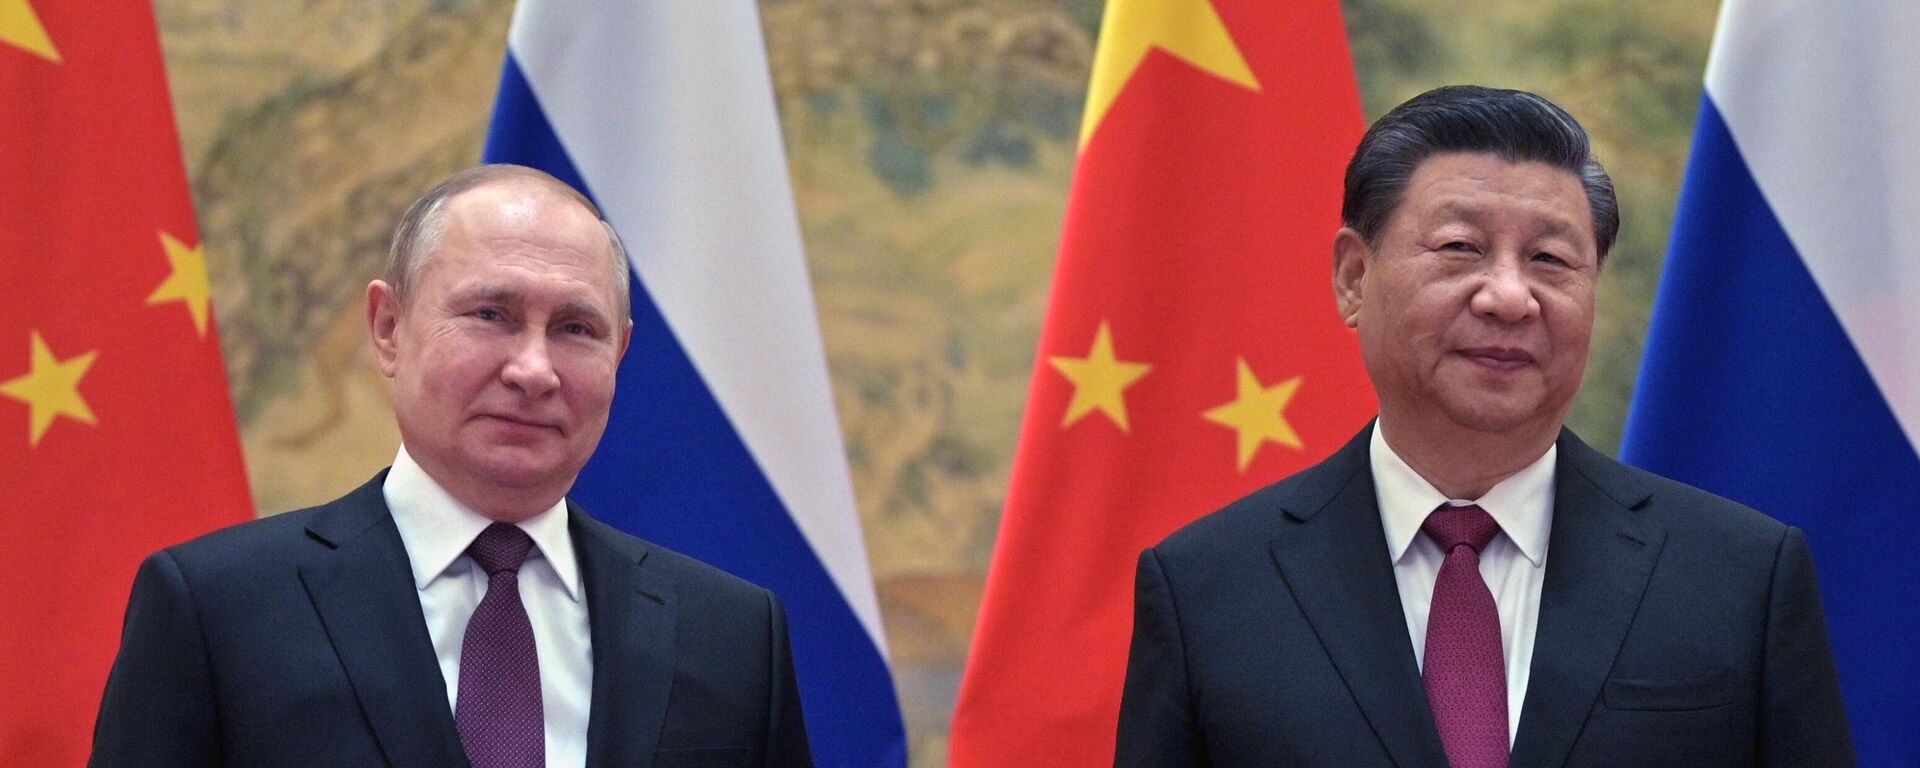 El presidente de Rusia, Vladímir Putin, llegó a Pekín para reunirse con su homólogo chino, Xi Jinping - Sputnik Mundo, 1920, 25.02.2022